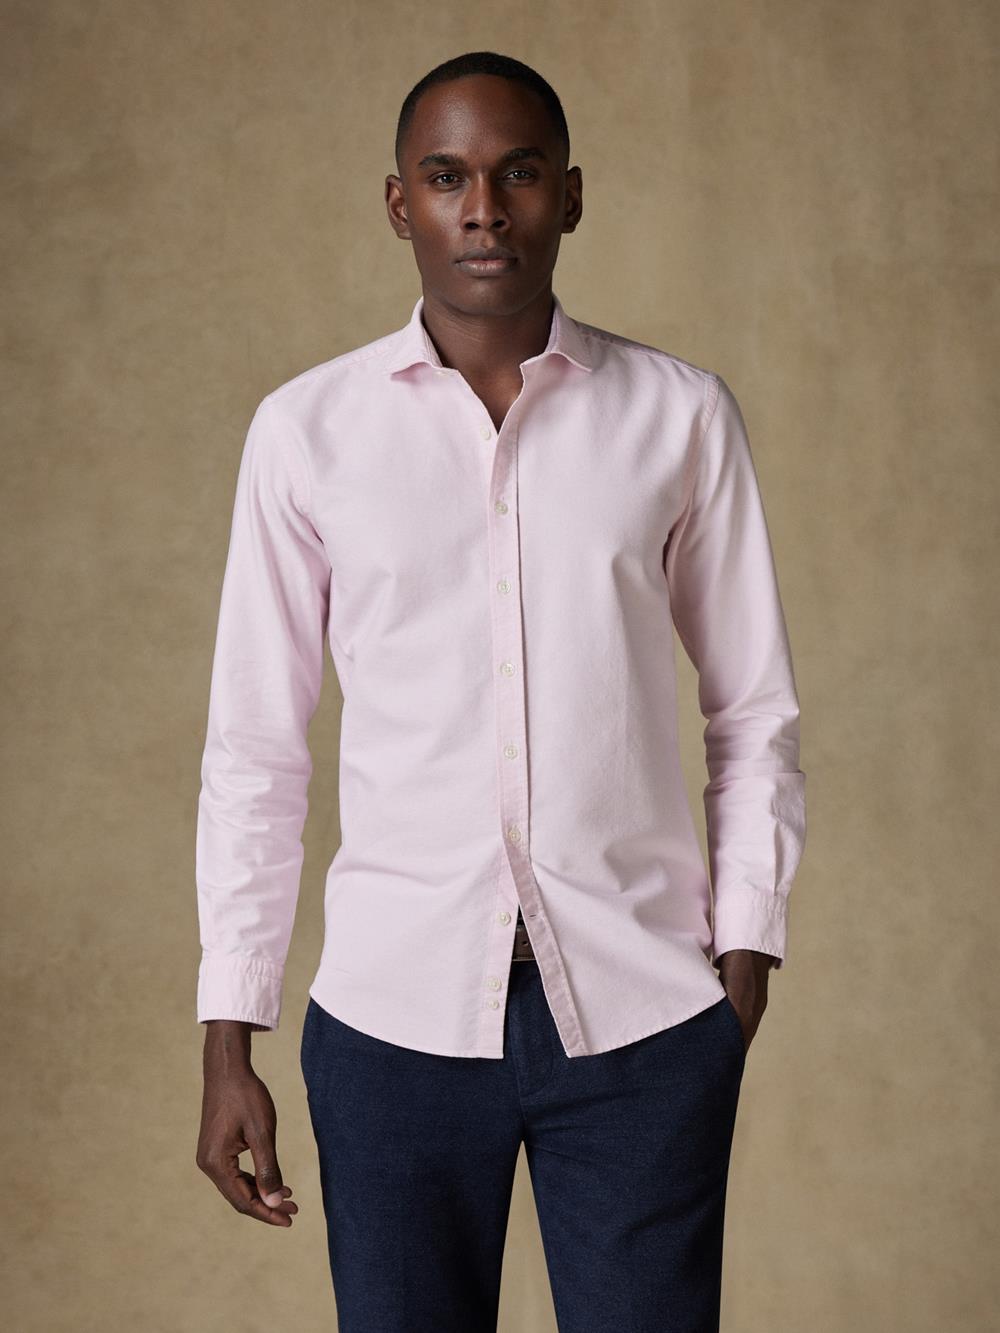 Camisa entallada oxford orgánica lavada rosa